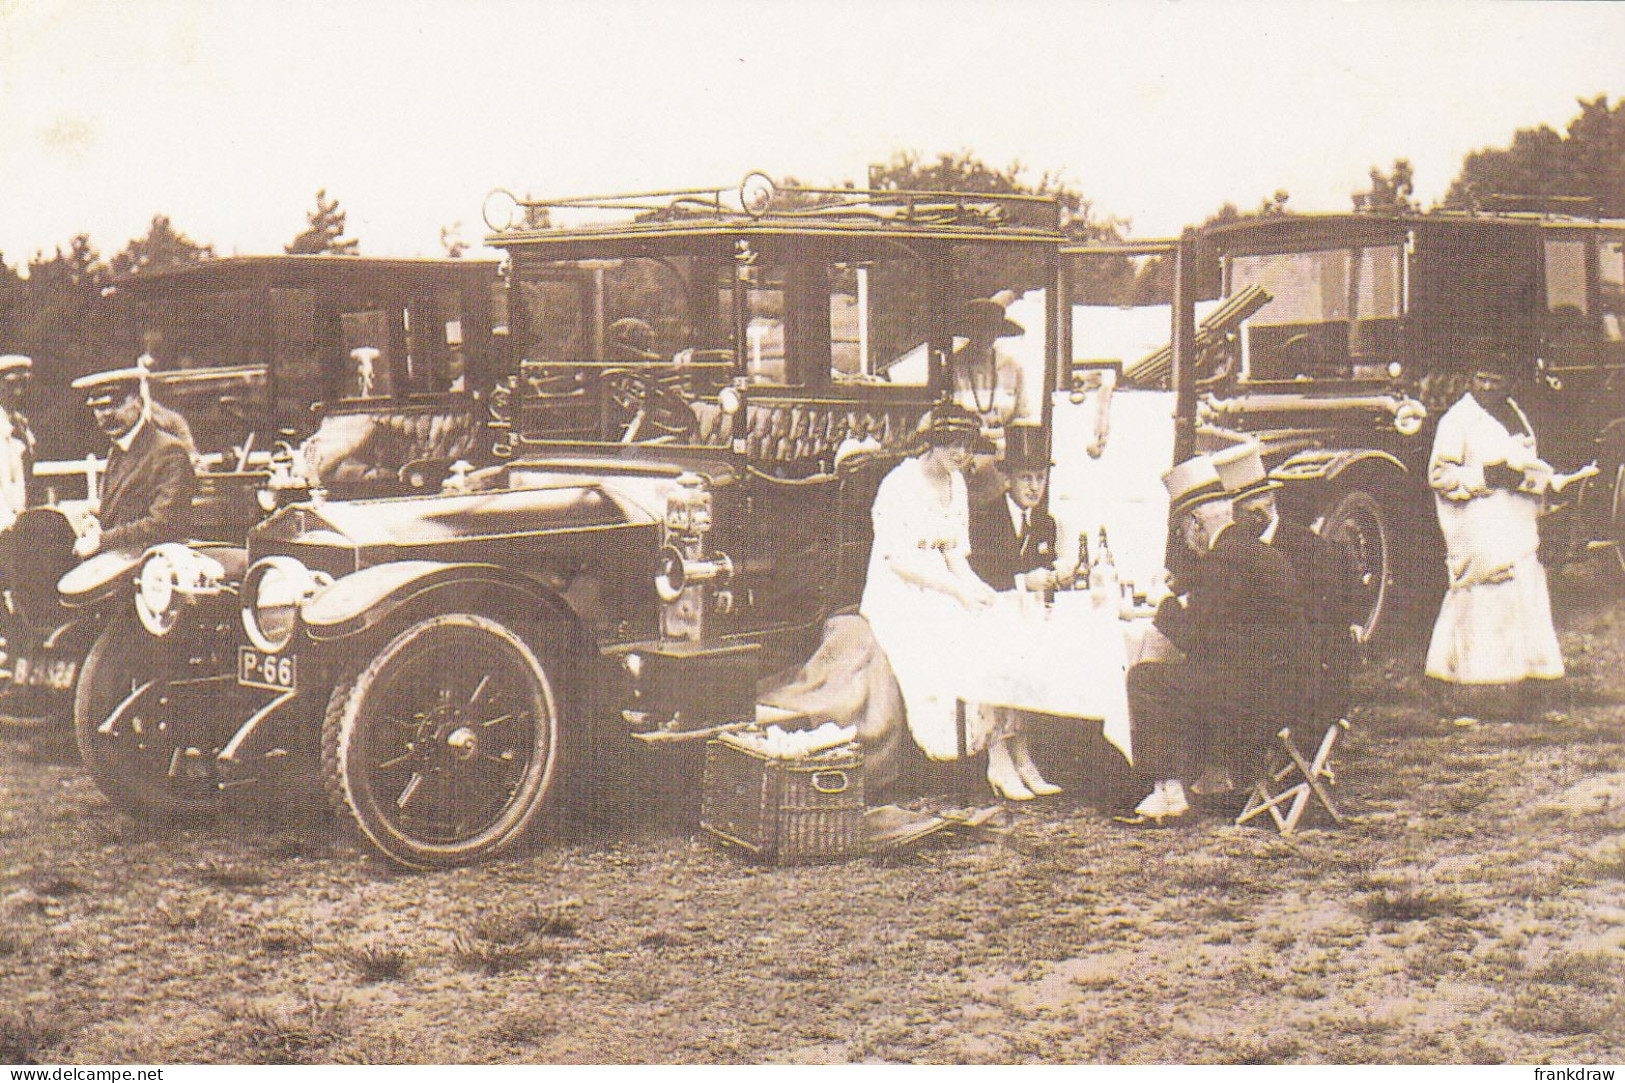 Nostalgia Postcard - Royal Ascot, June 1921  - VG - Non Classés